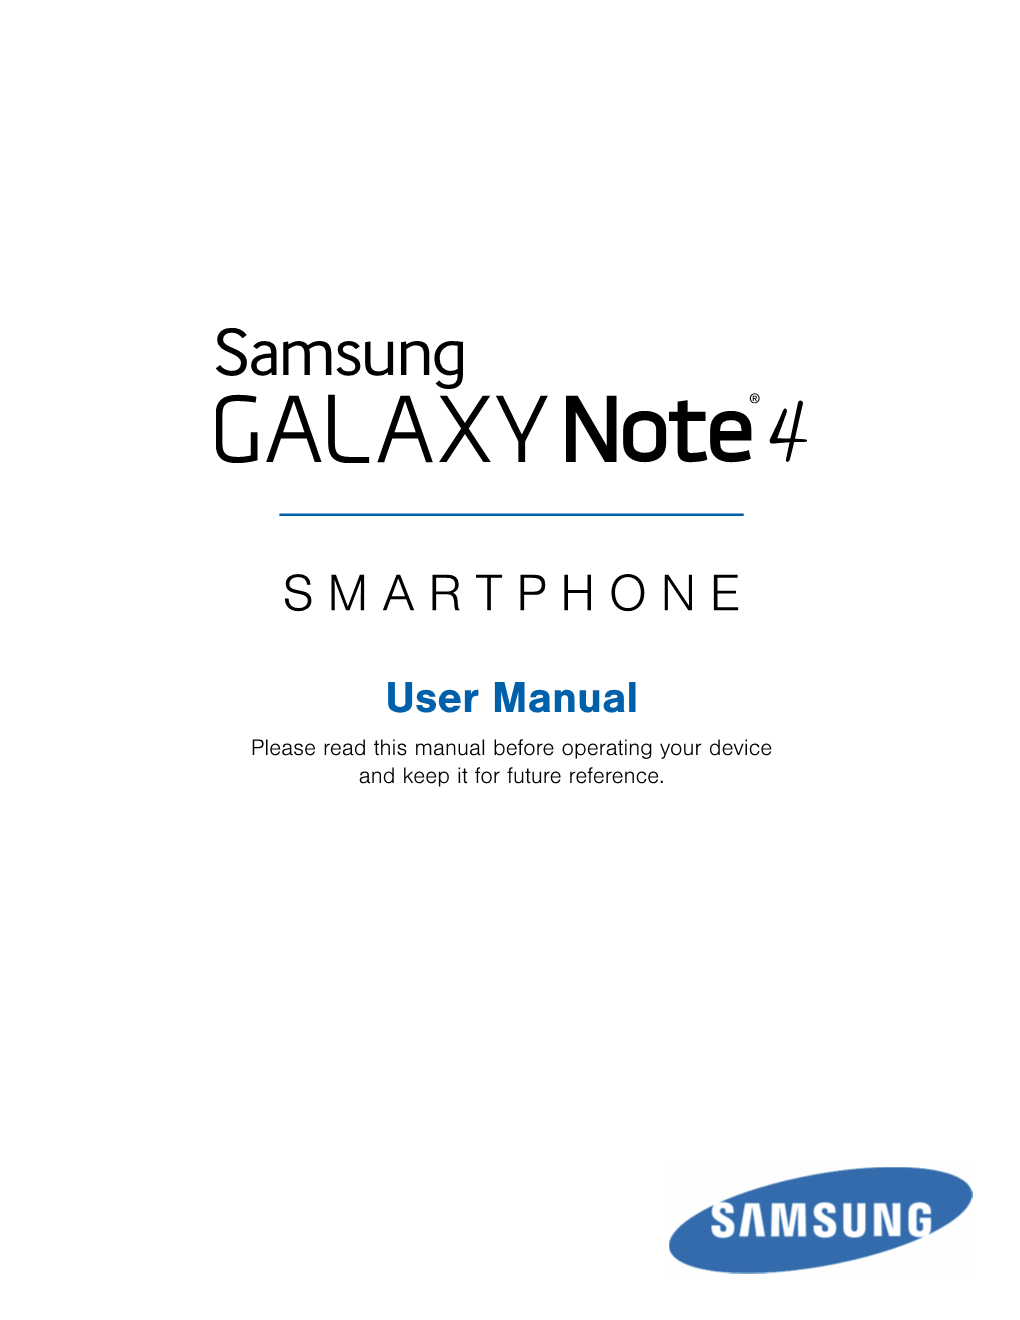 Samsung GALAXY NOTE 4 User Manual